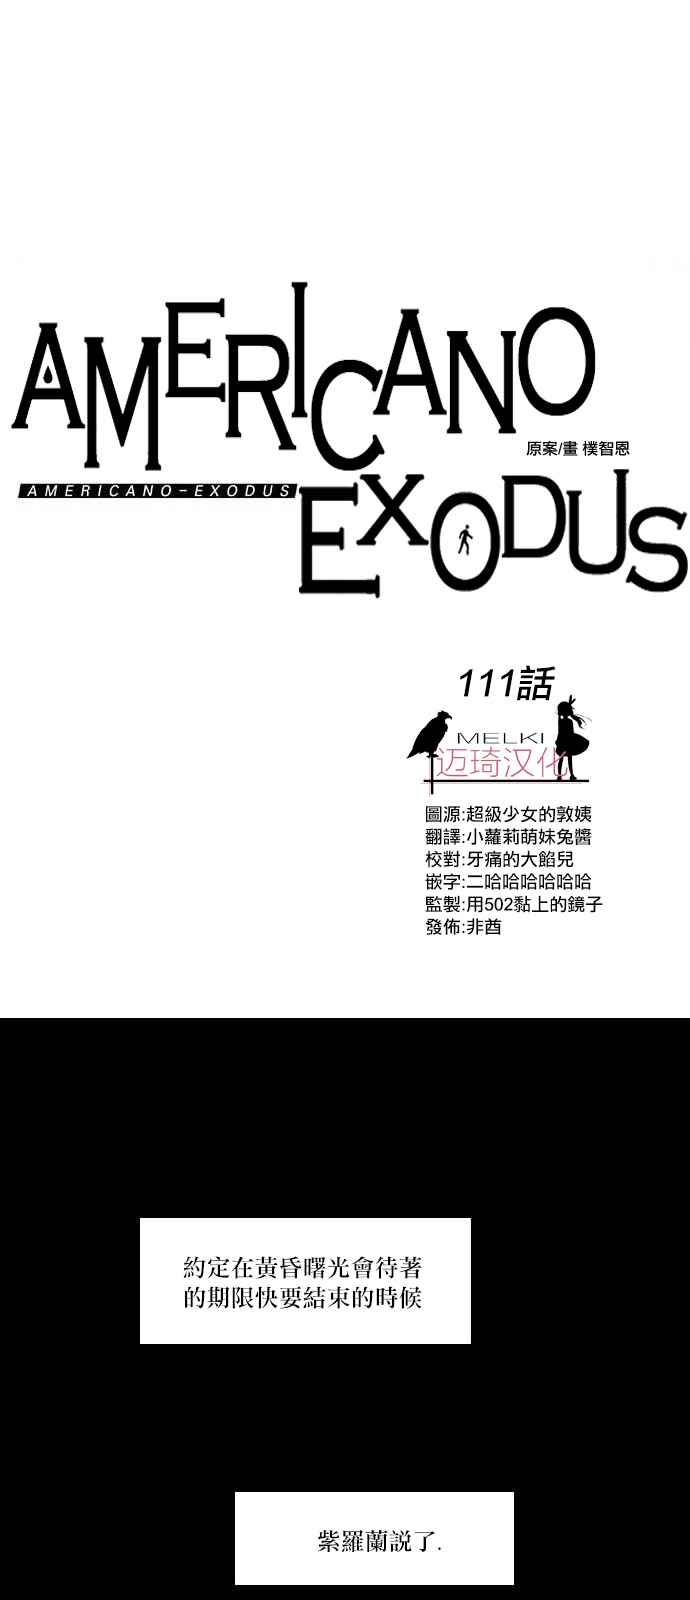 《Americano-exodus》漫画 exodus 111集